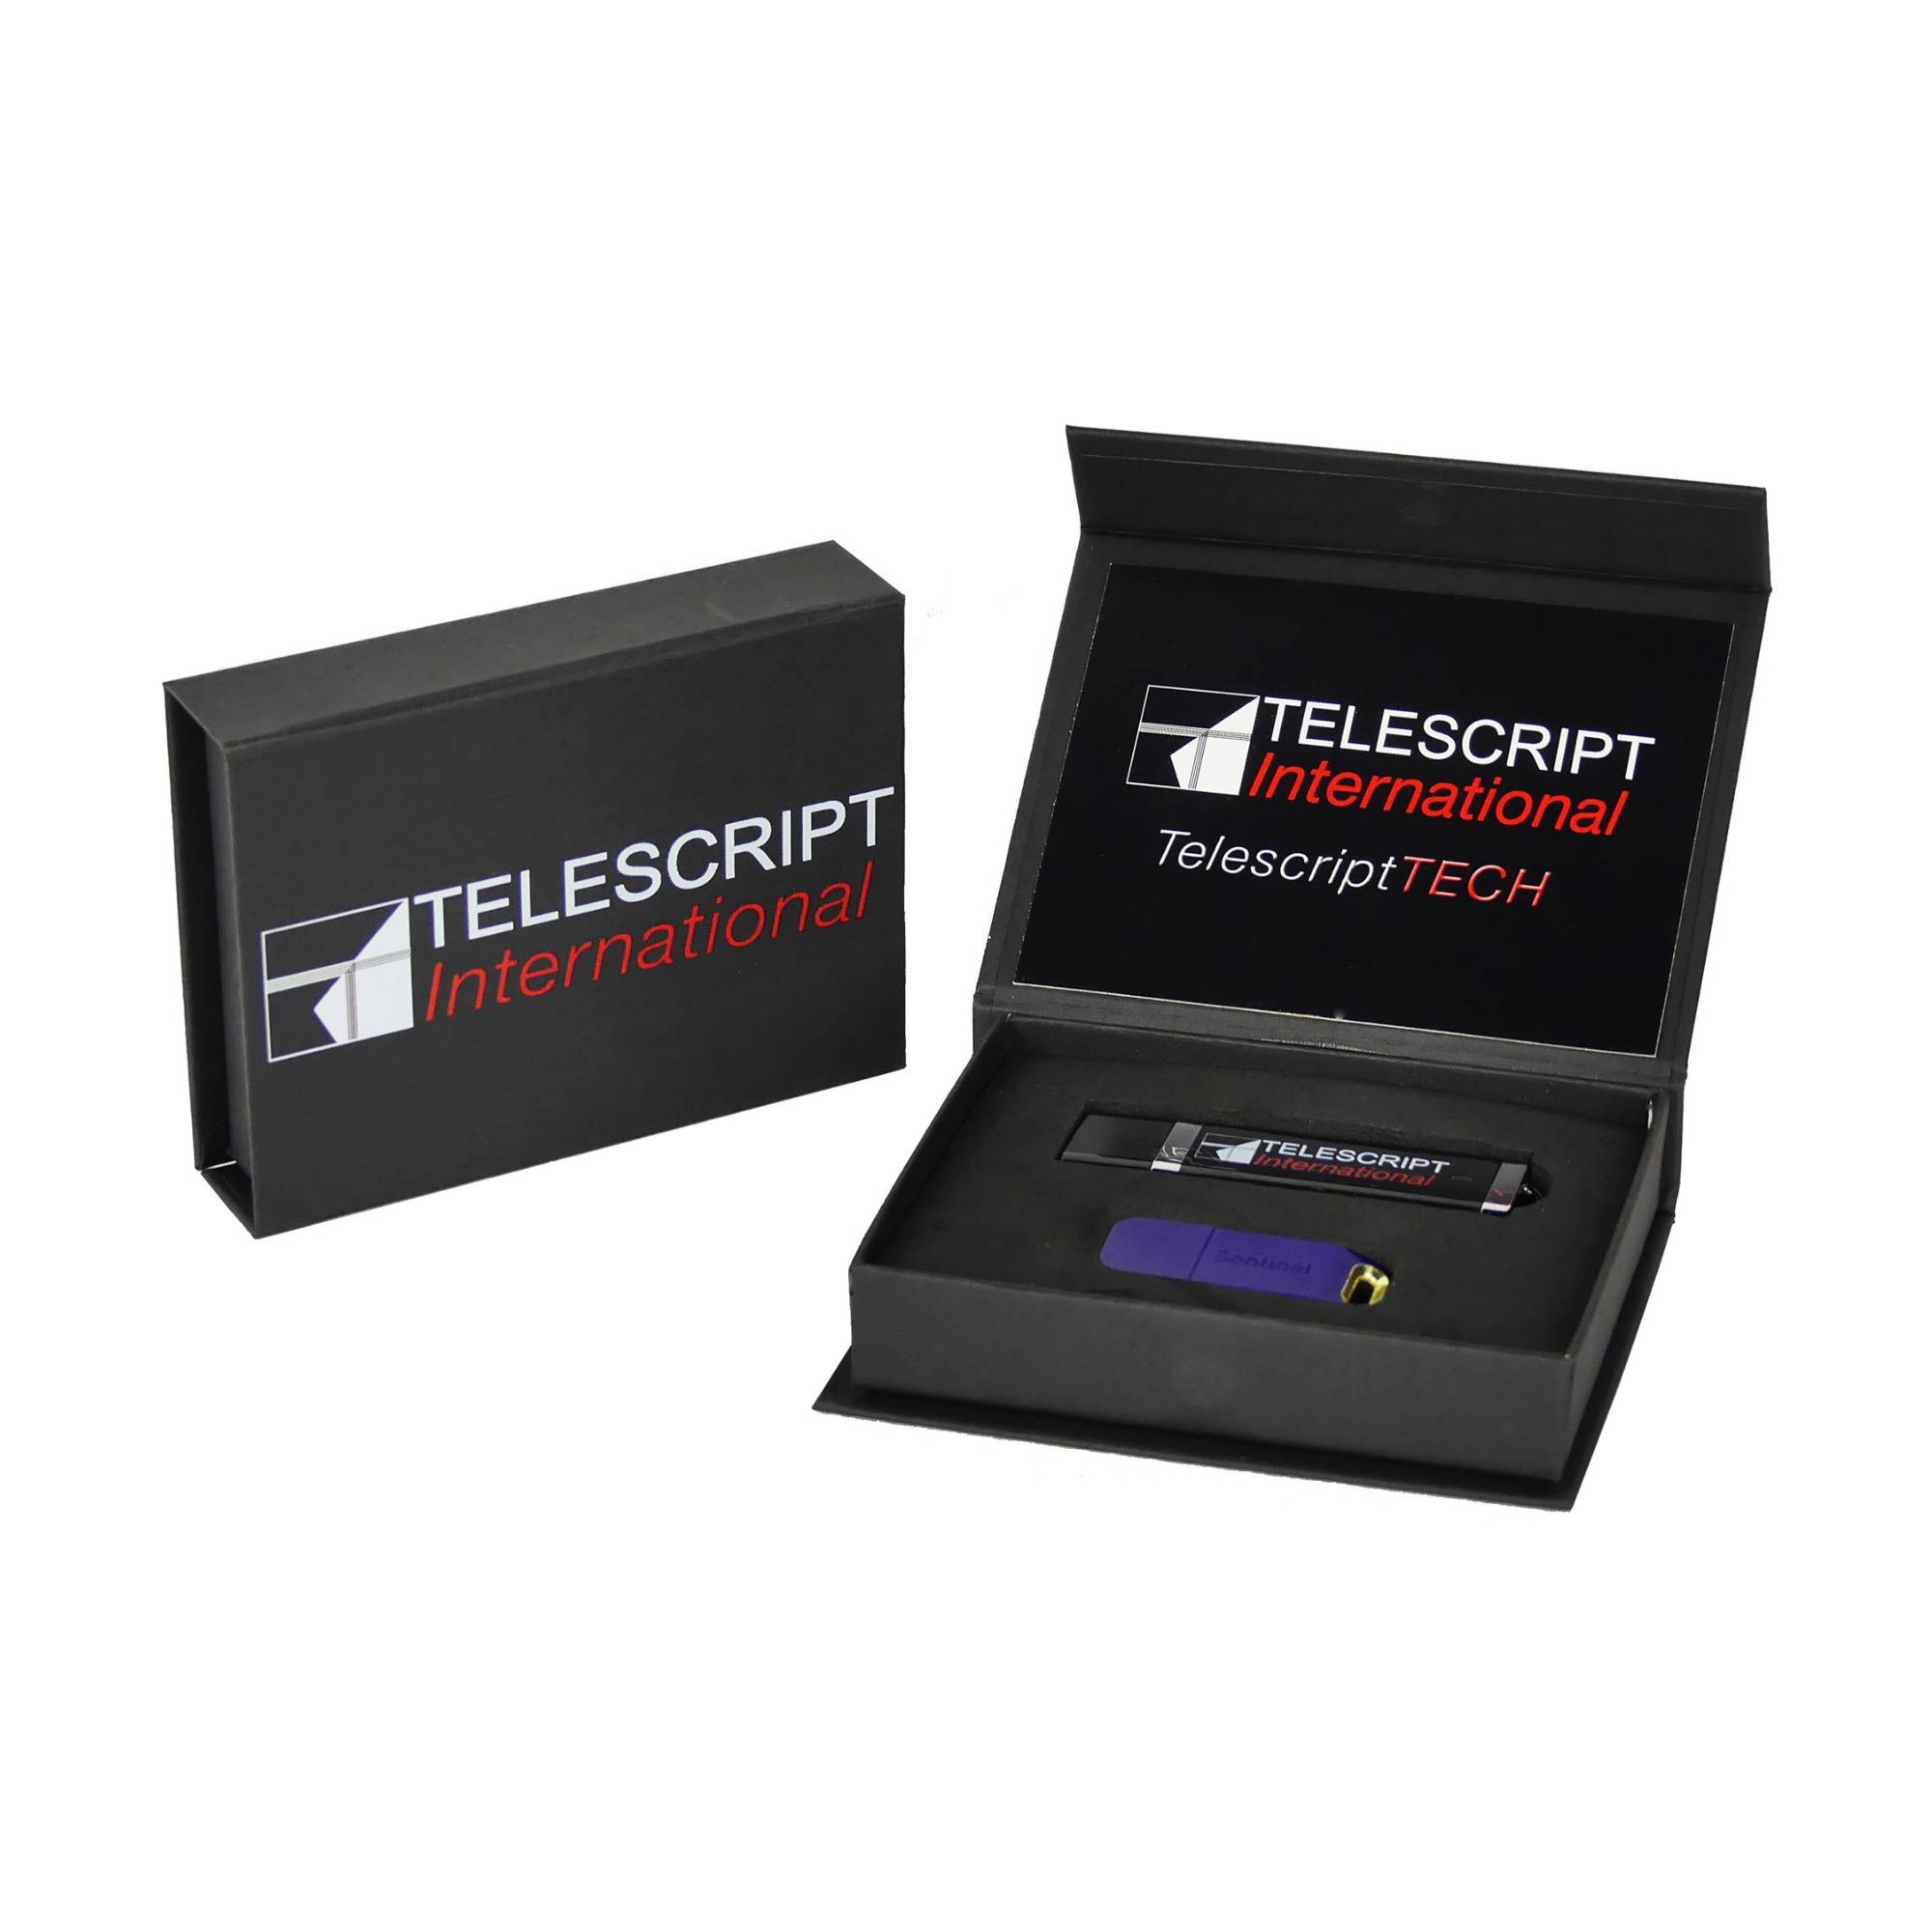 Telescript TeleScript TECH Professional Teleprompting Software